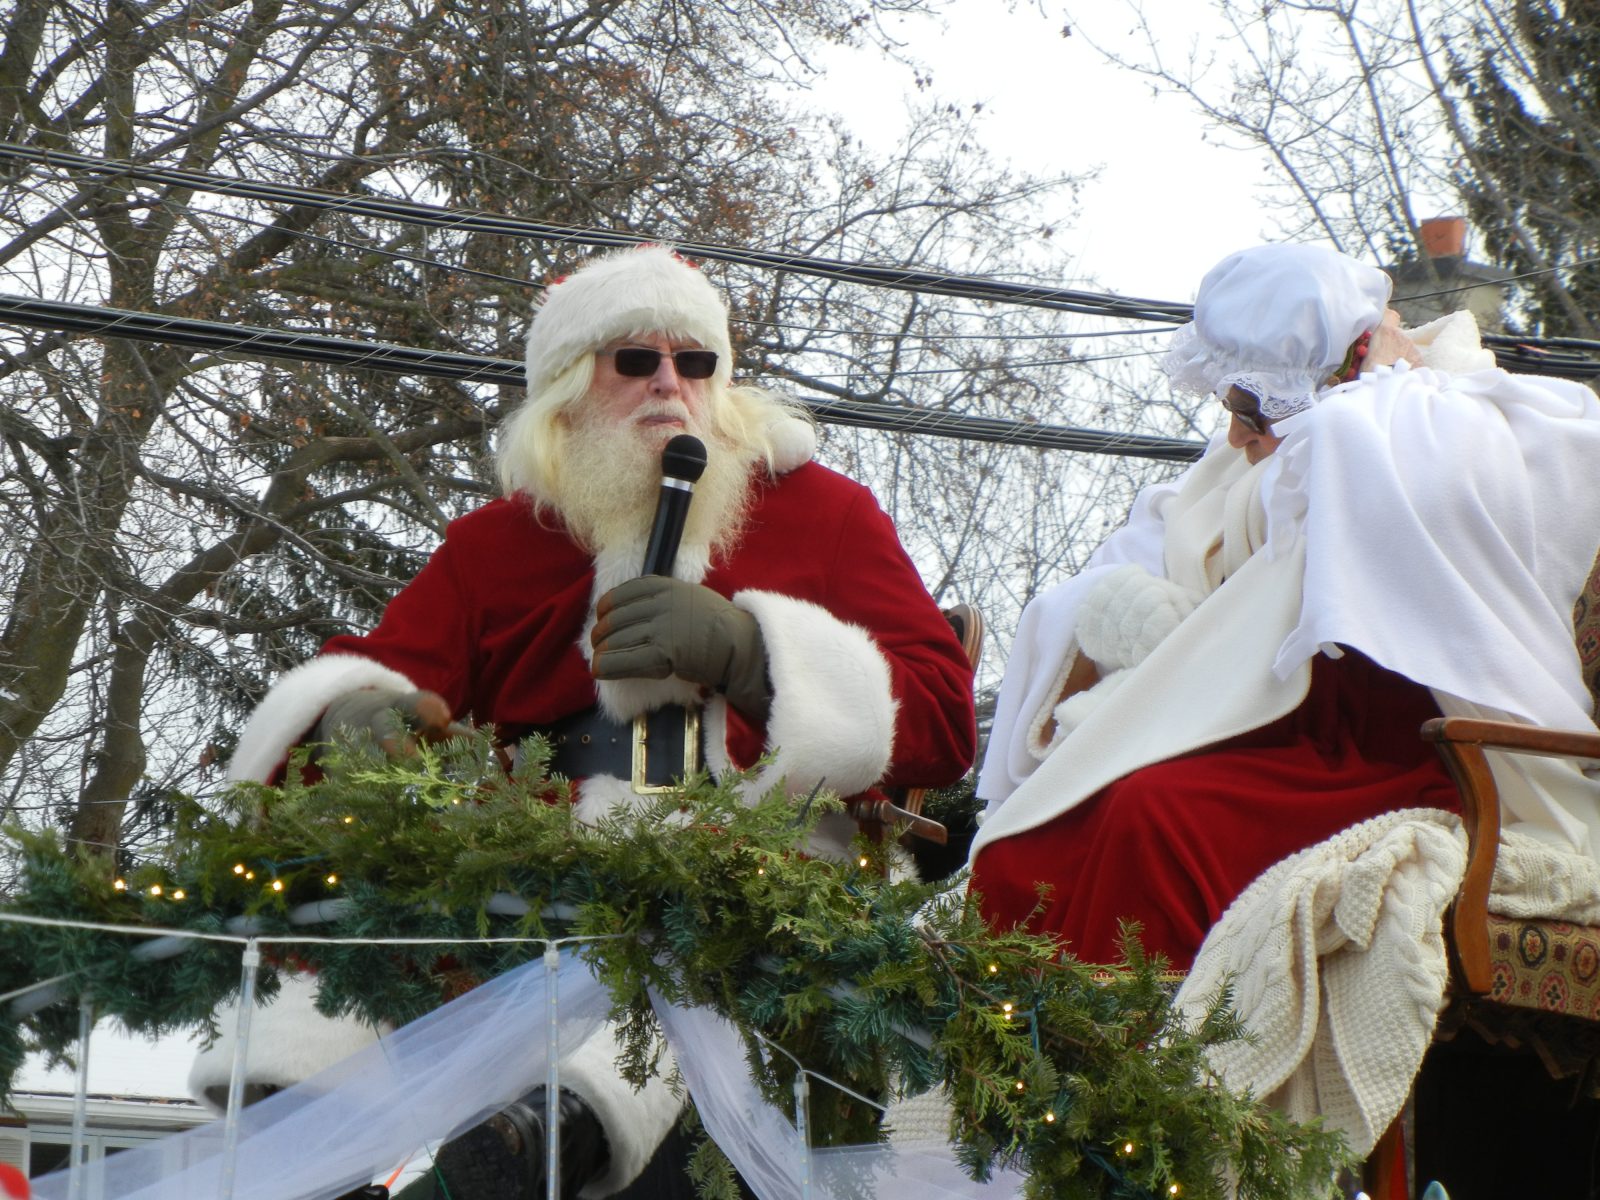 Russell Township celebrates the Christmas season